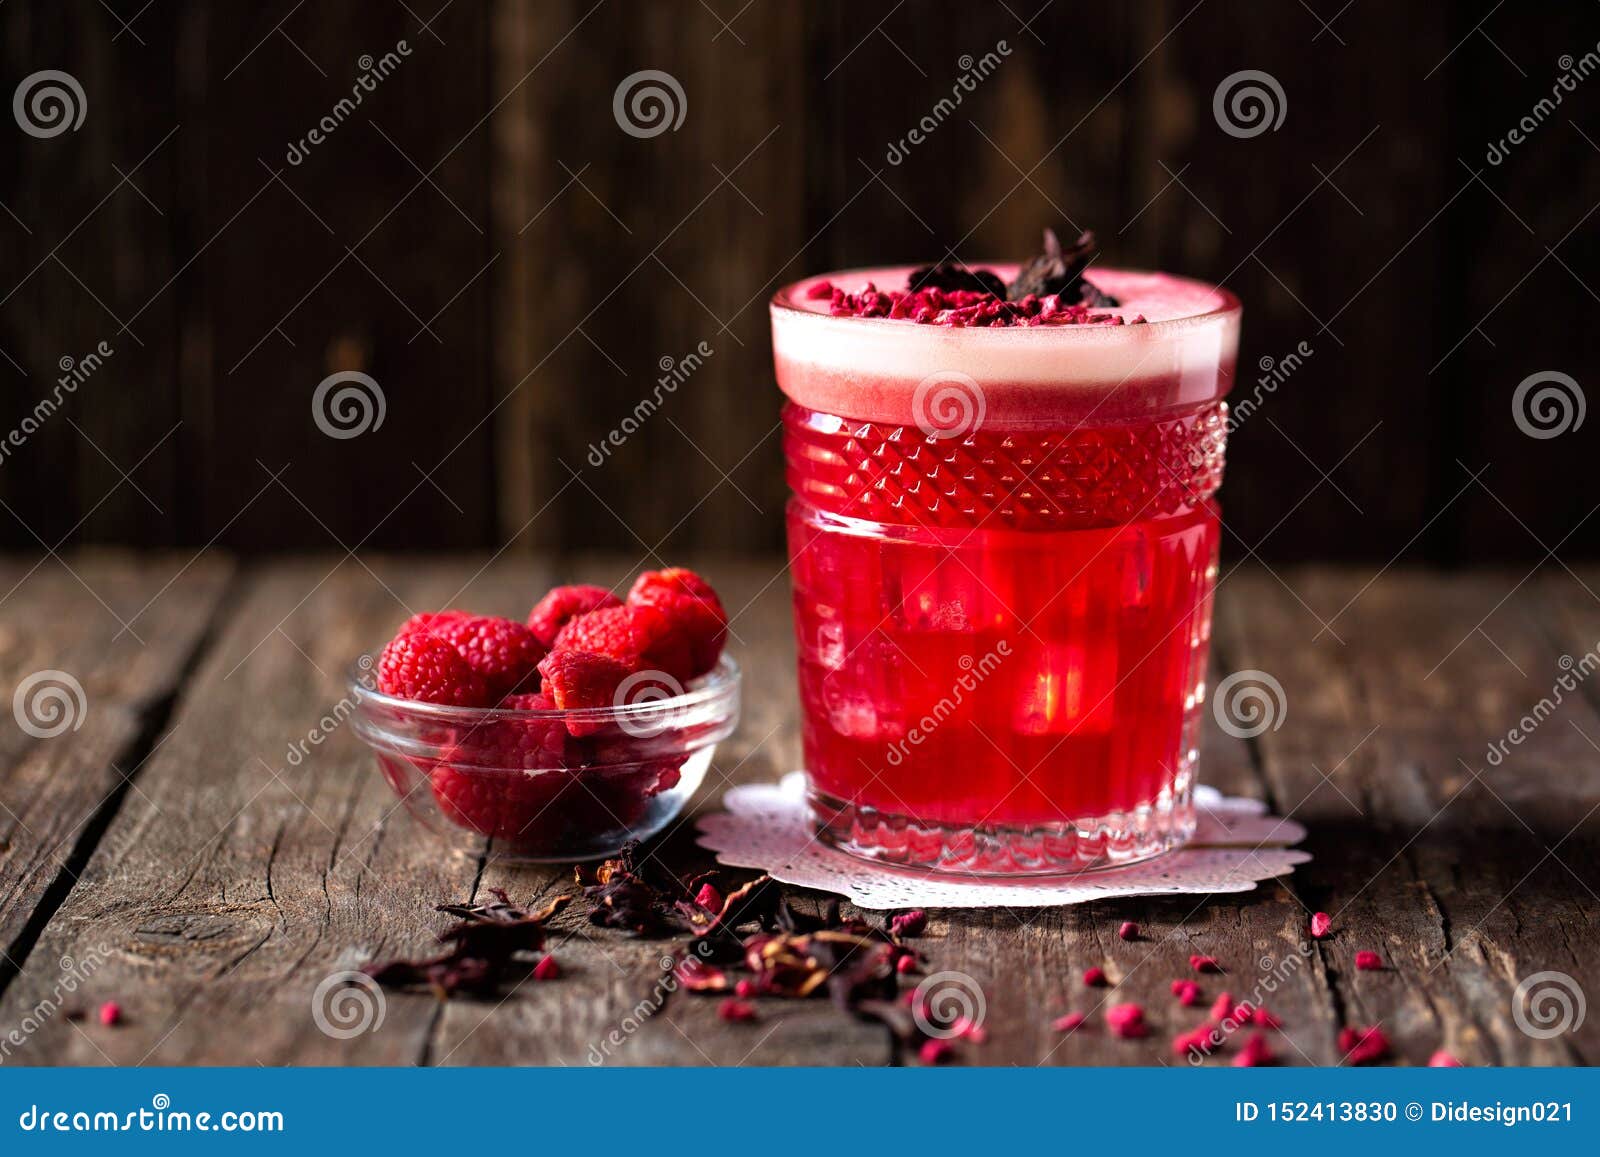 love affair cocktail alongside with fresh berry fruit